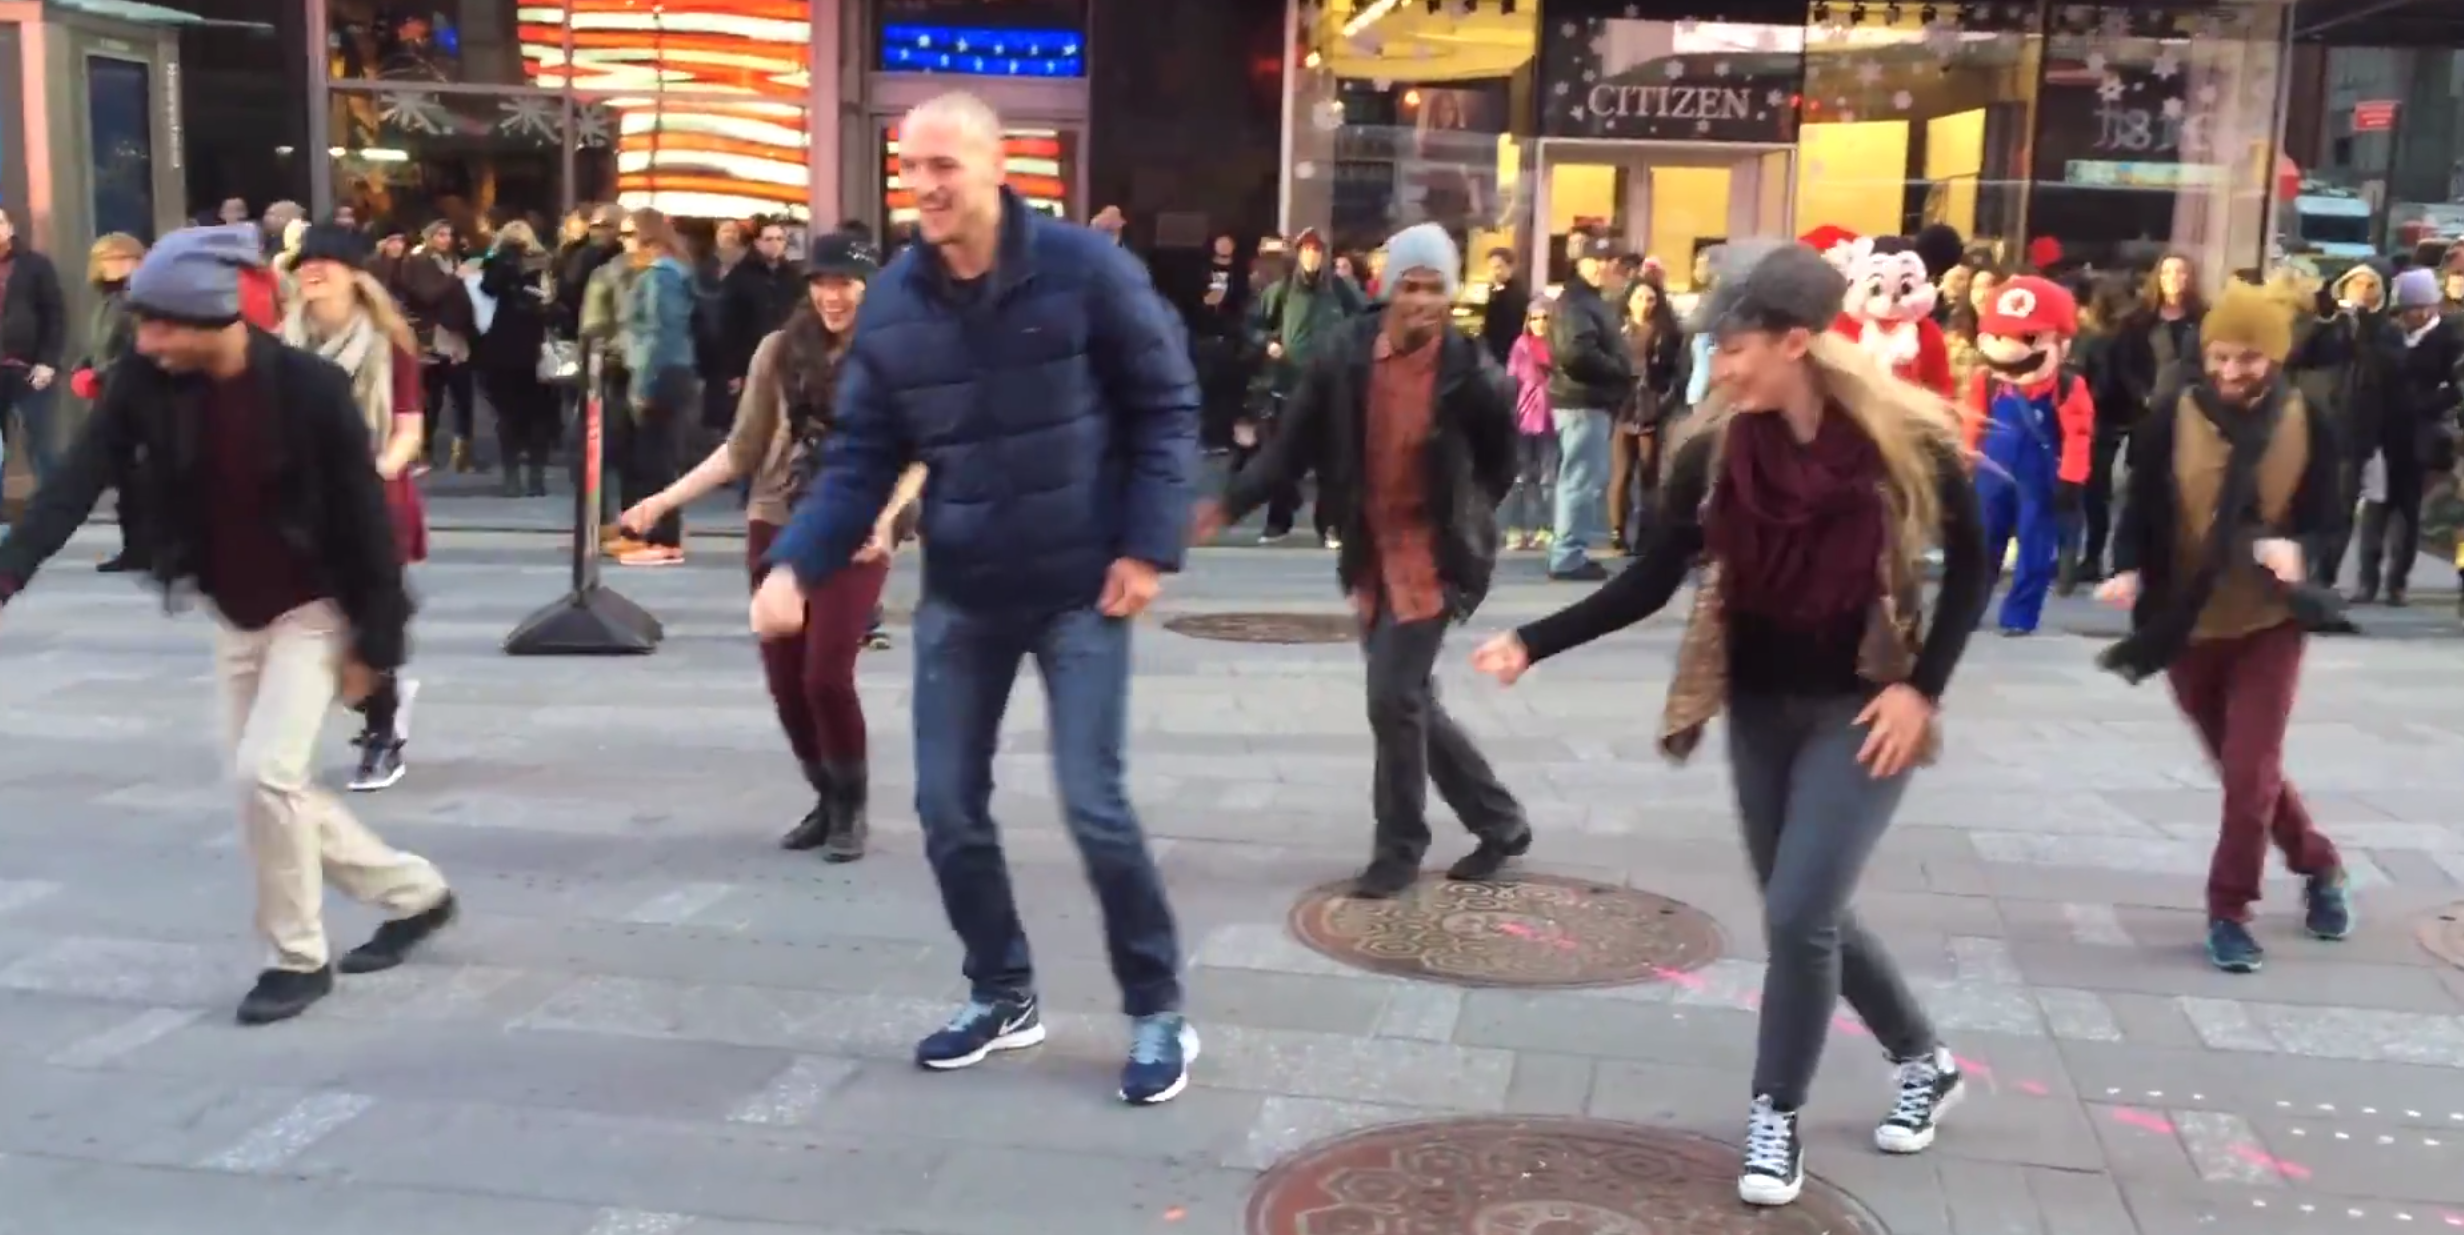 The New York flashmob